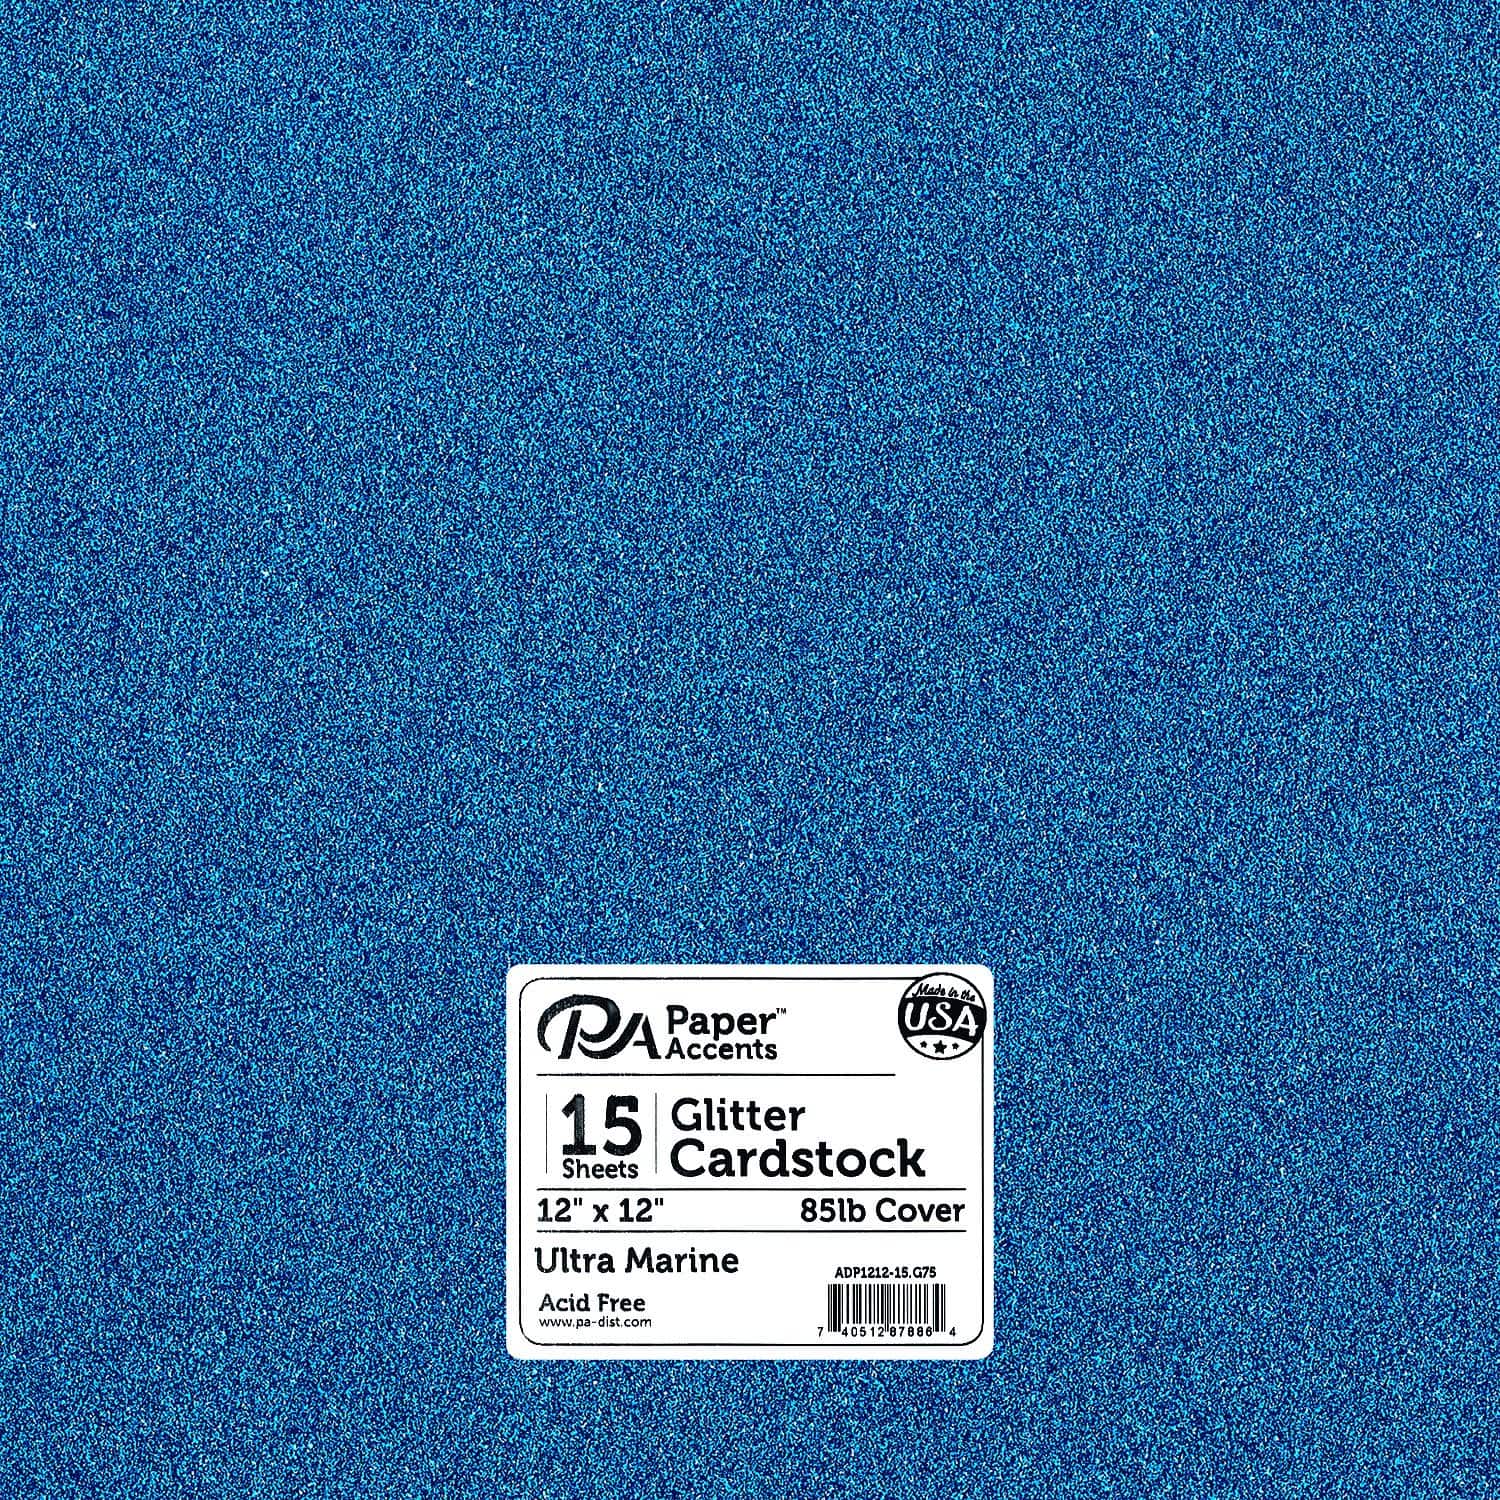 Glitter Cardstock Hot Purple 12 x 12 81# Cover Sheets Bulk Pack of 15